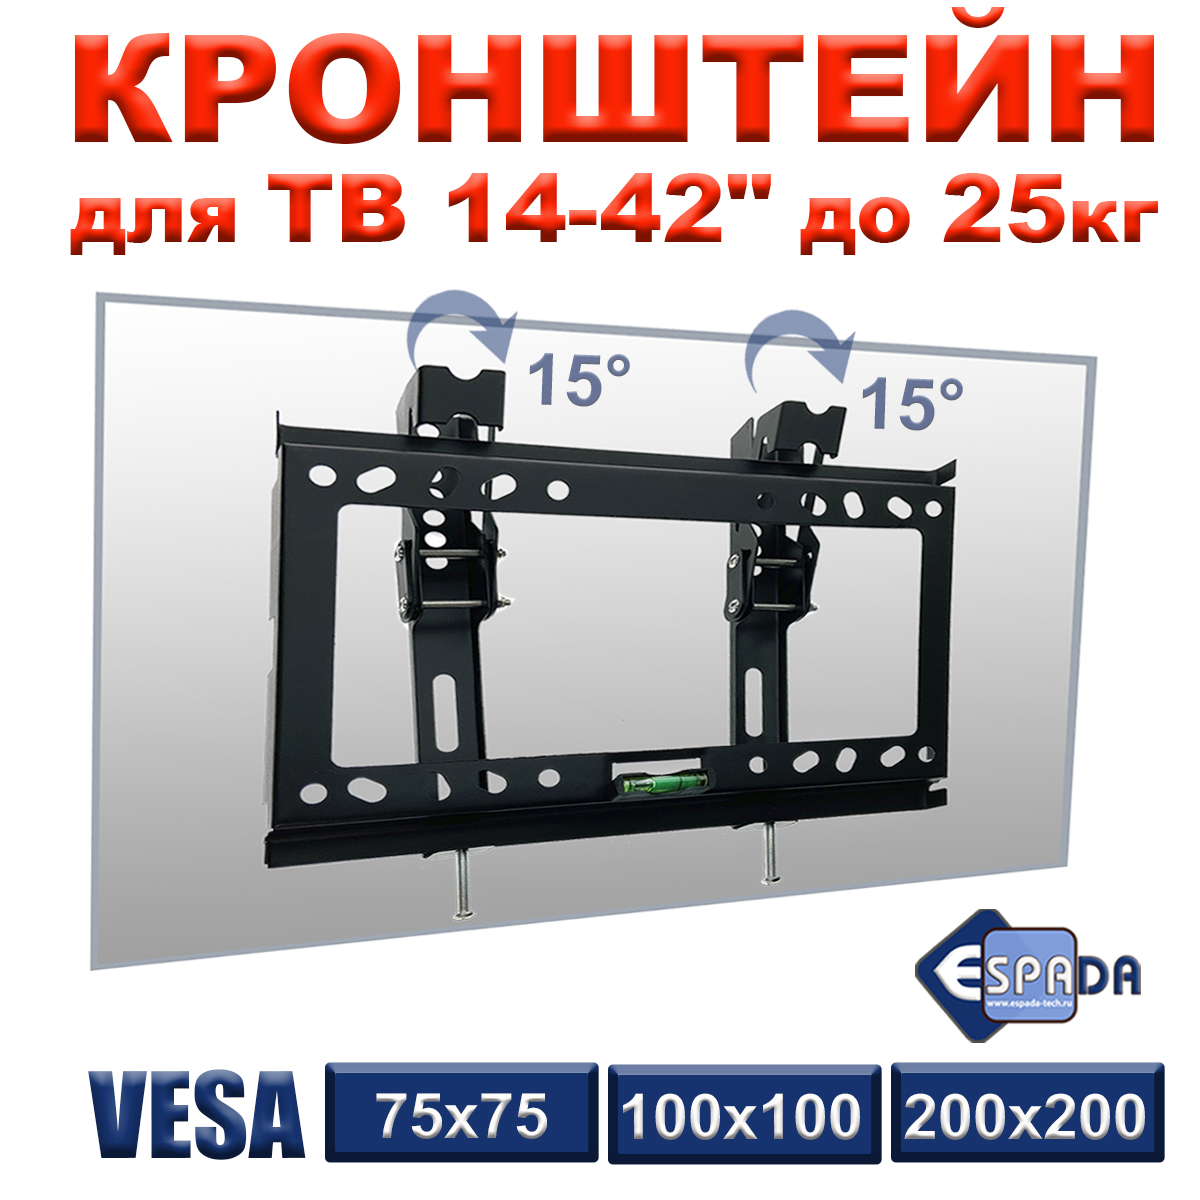 Кронштейн настенный наклонный Ekr1443wa Espada для телевизора диагональю от 14" до 42" весом до 25кг